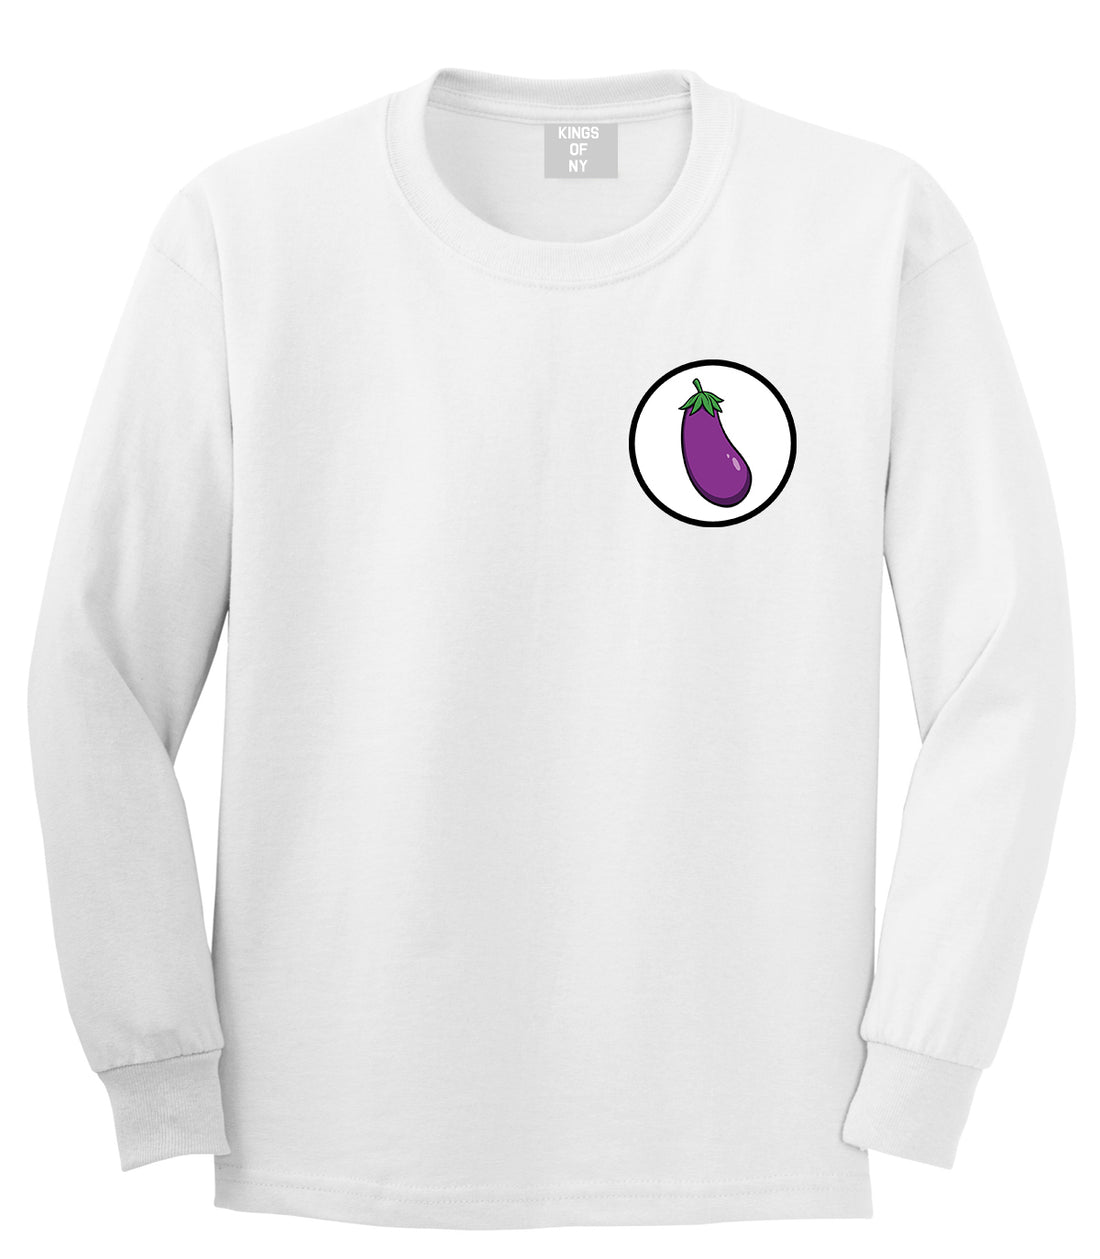 Eggplant Emoji Chest Mens White Long Sleeve T-Shirt by Kings Of NY